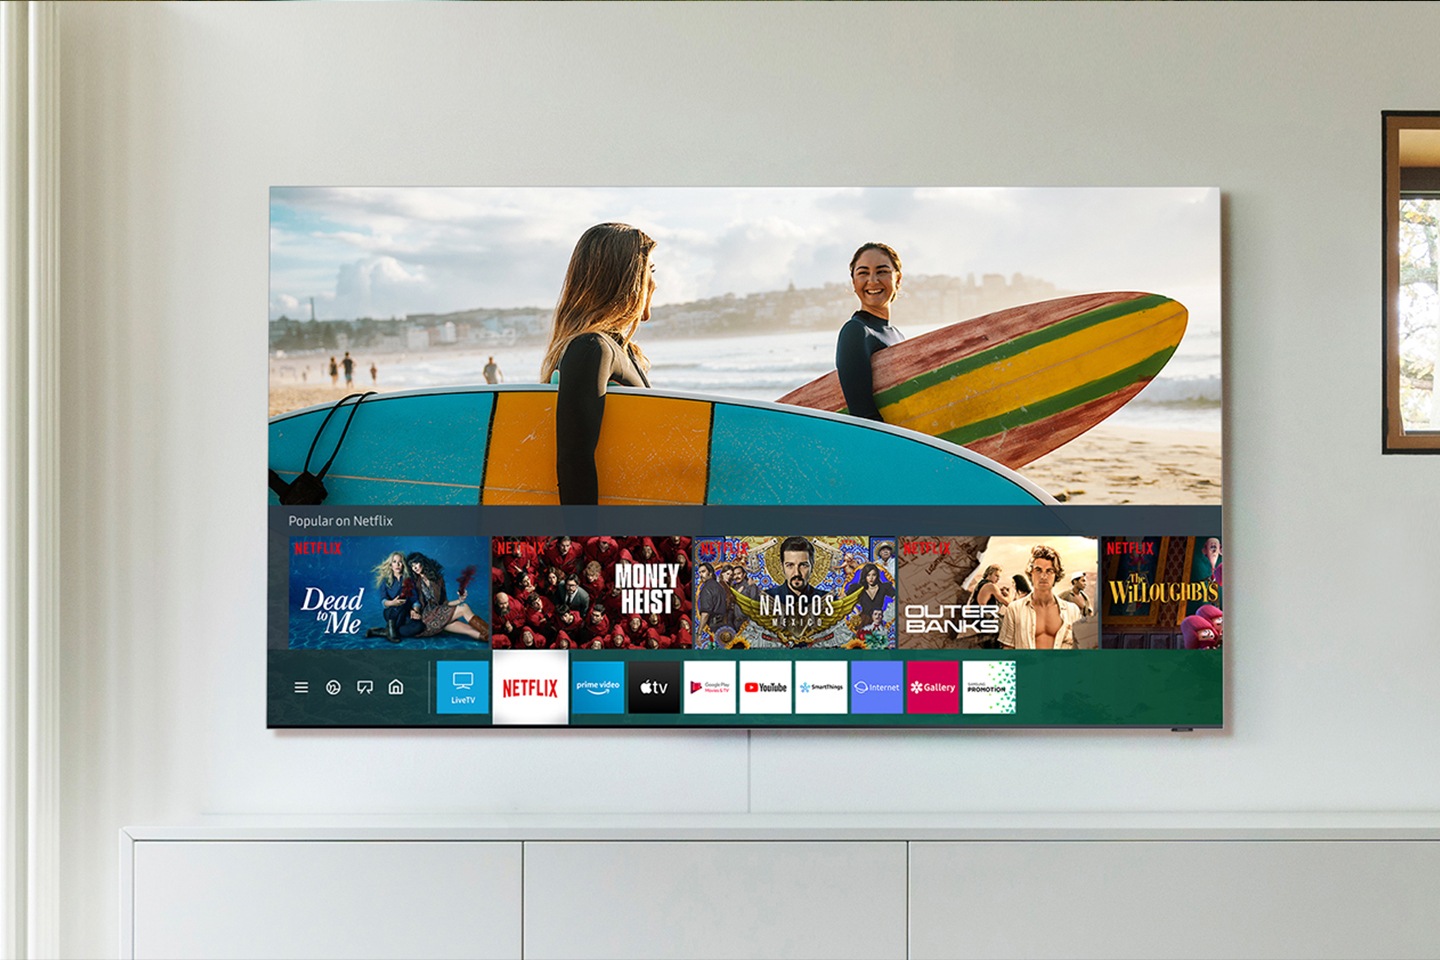 The Netflix app displayed on the menu of a Samsung Smart TV.